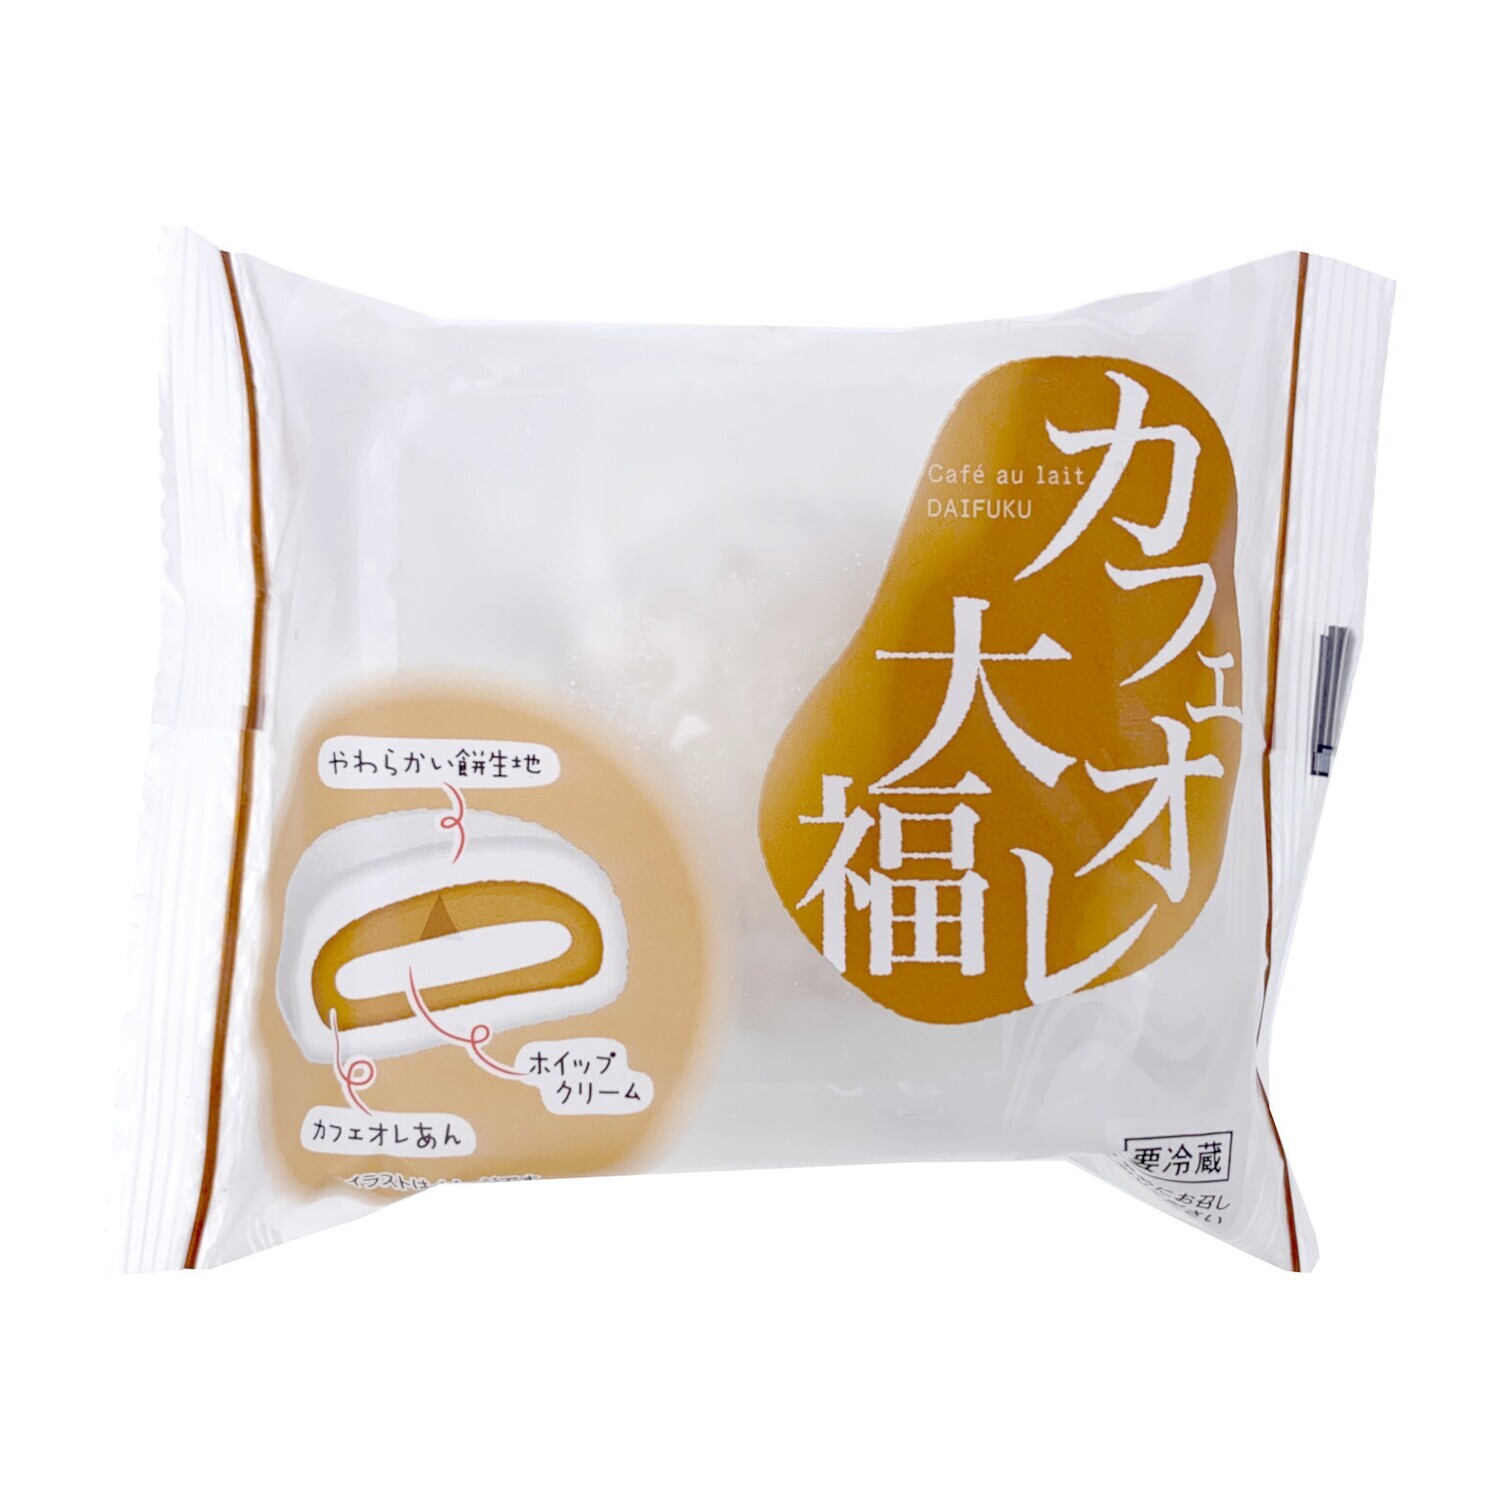 Minato Cafe Au Lait Cream Mochi (60G)